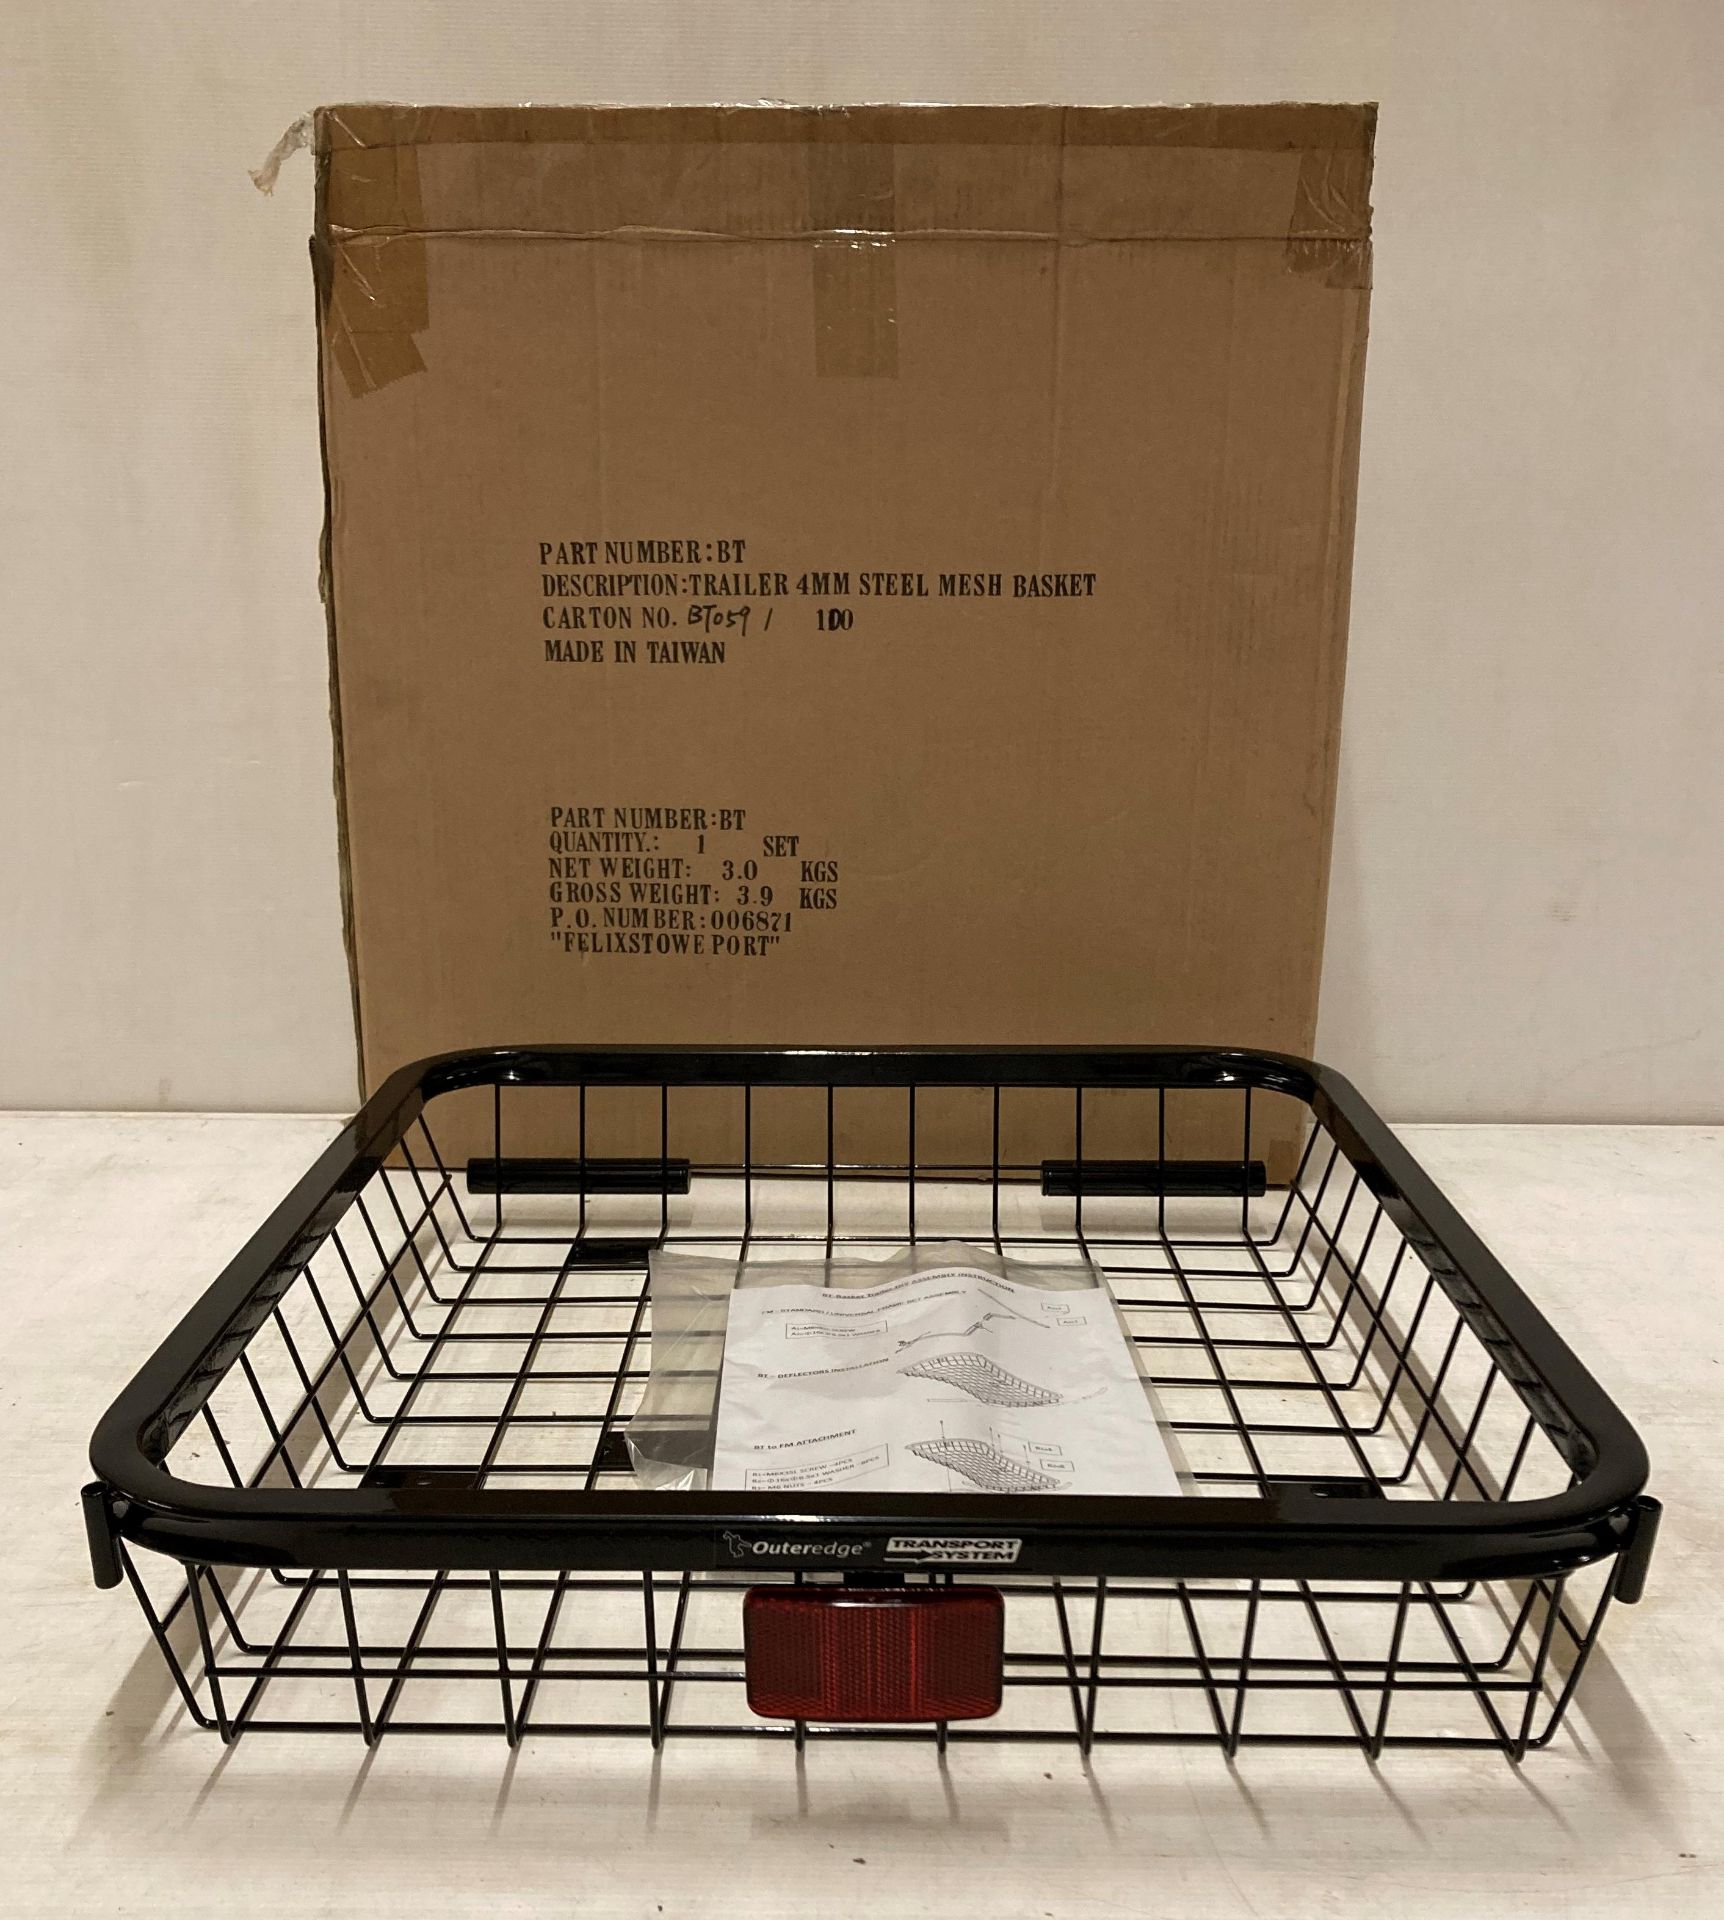 Trailer 4mm steel mesh basket (saleroom location: M05) - Image 2 of 2